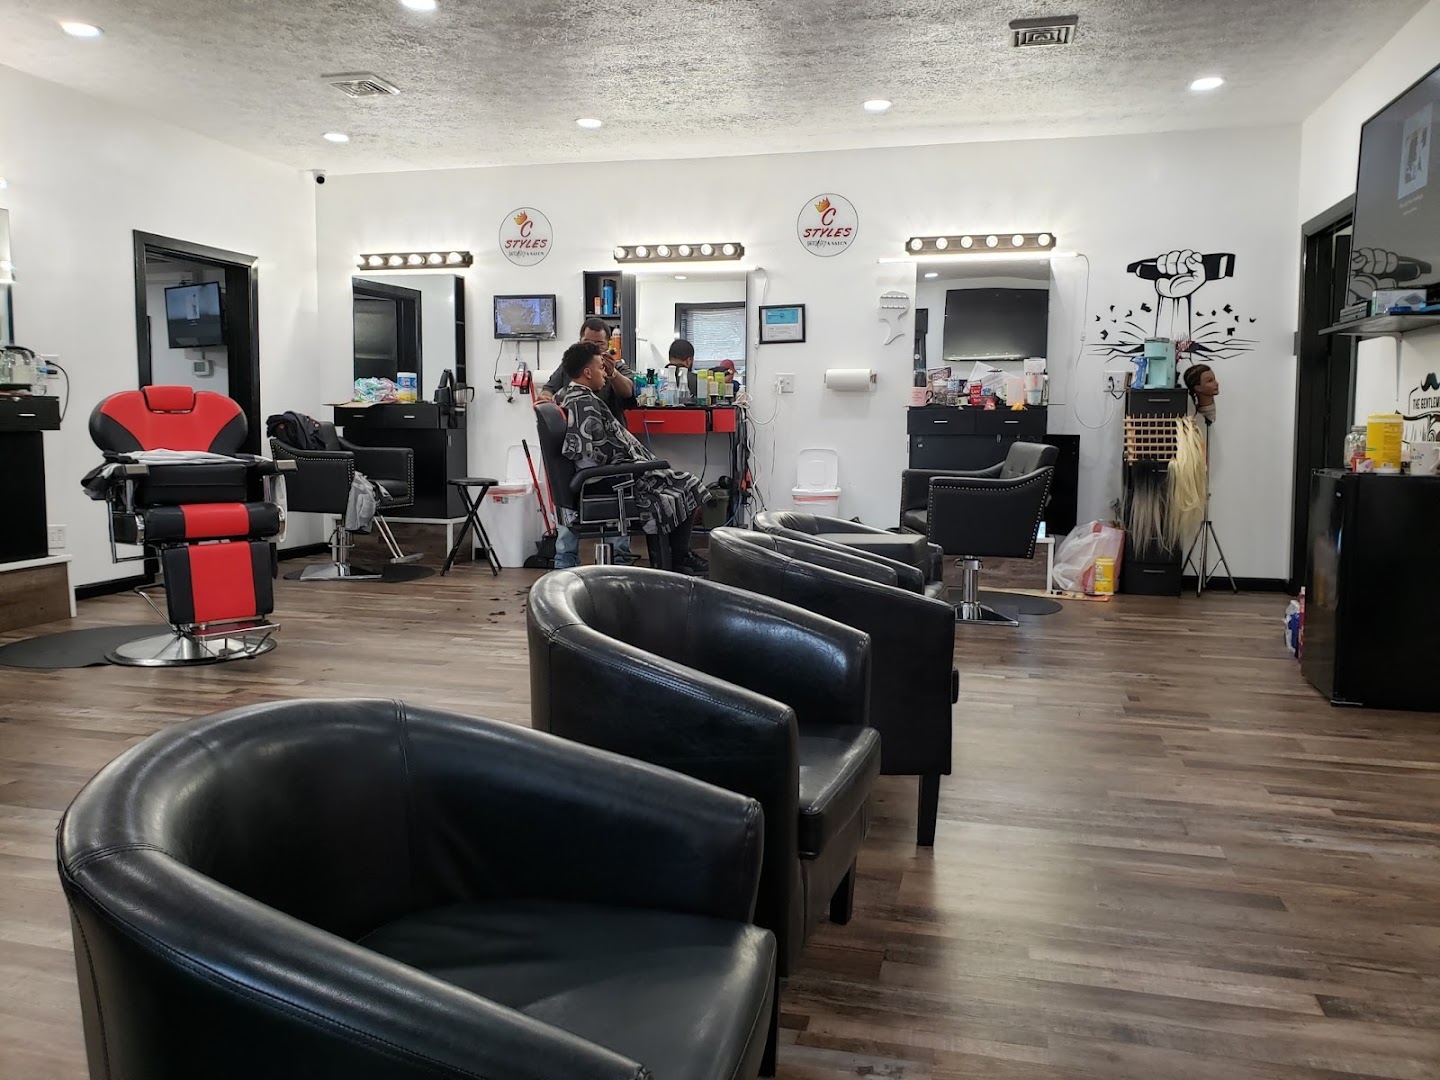 C Styles Barbershop & Salon